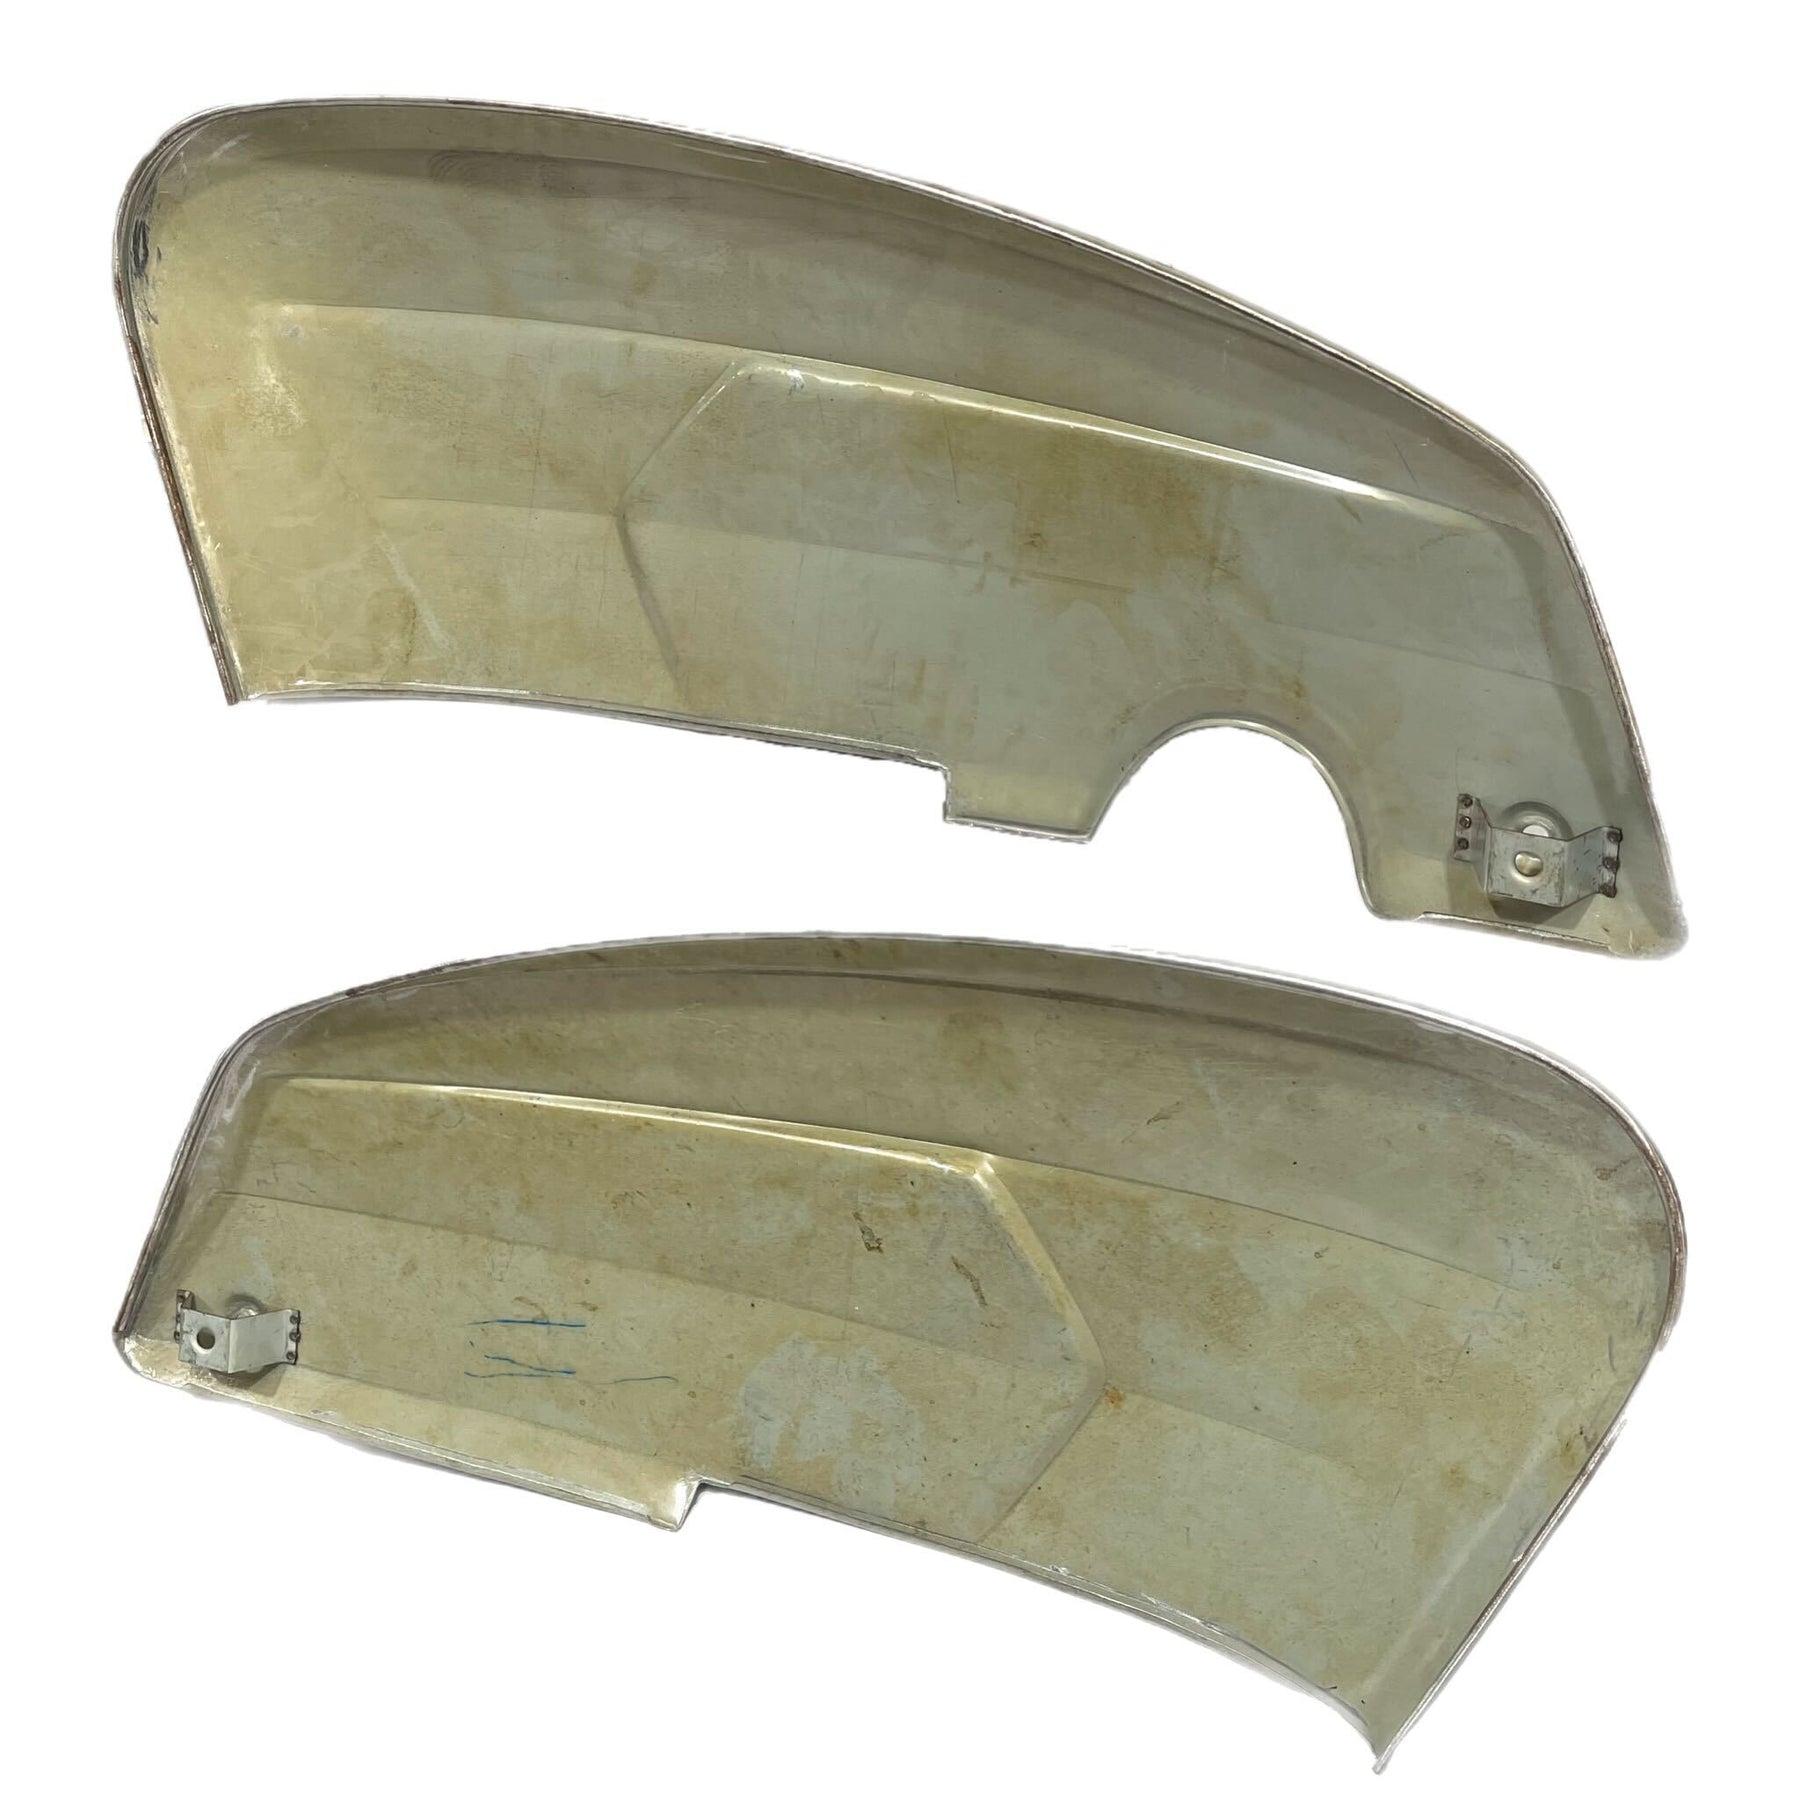 Lambretta SX200 Side Panels With Handle Holes - Pair - Primer